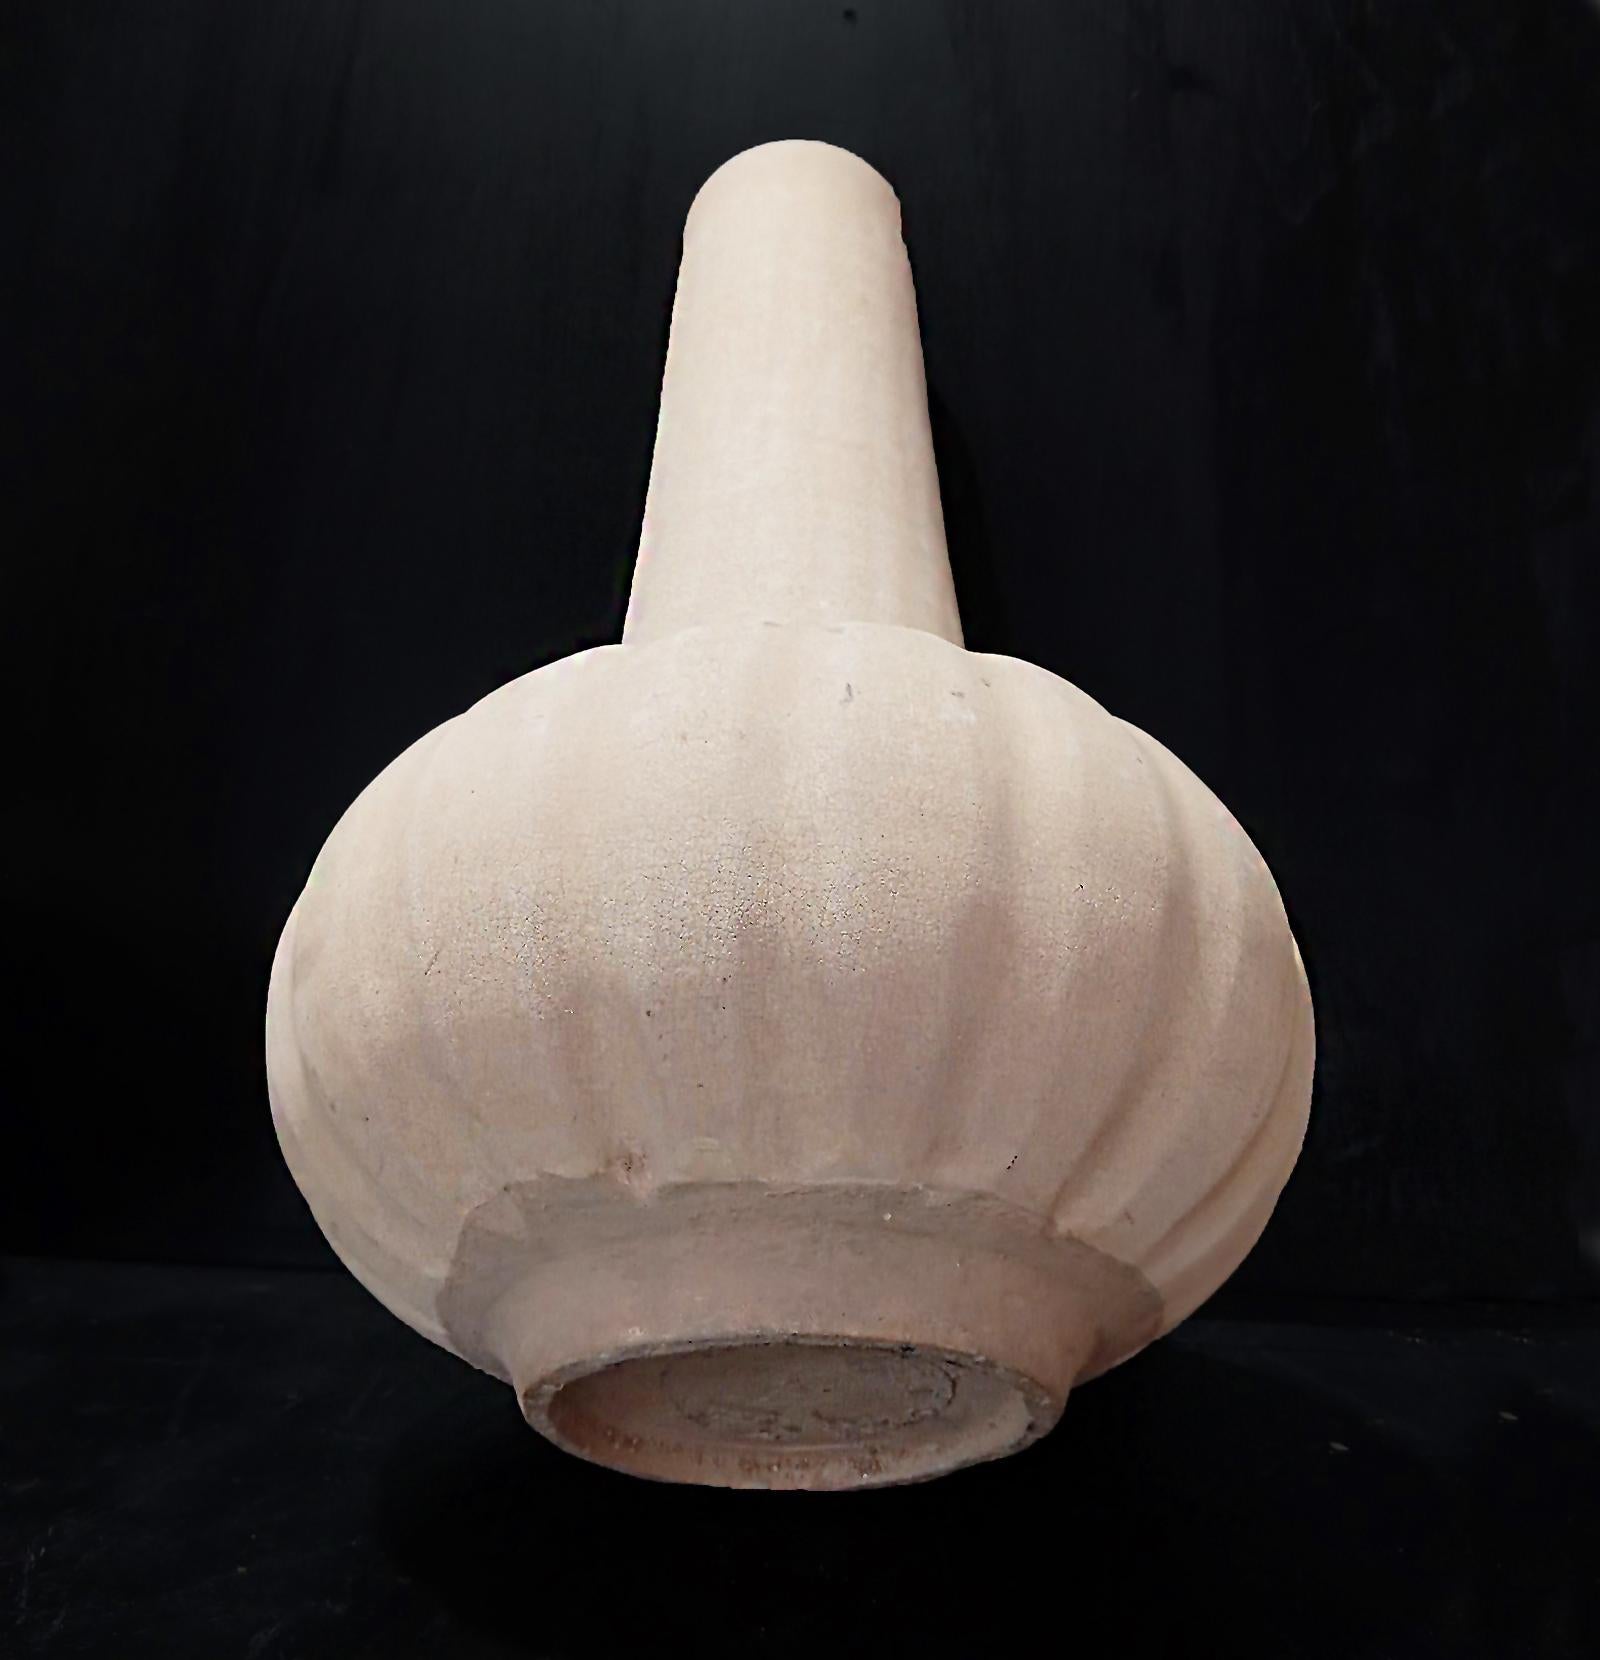 Glazed Thai Ceramic Vase with Light Beige Glaze